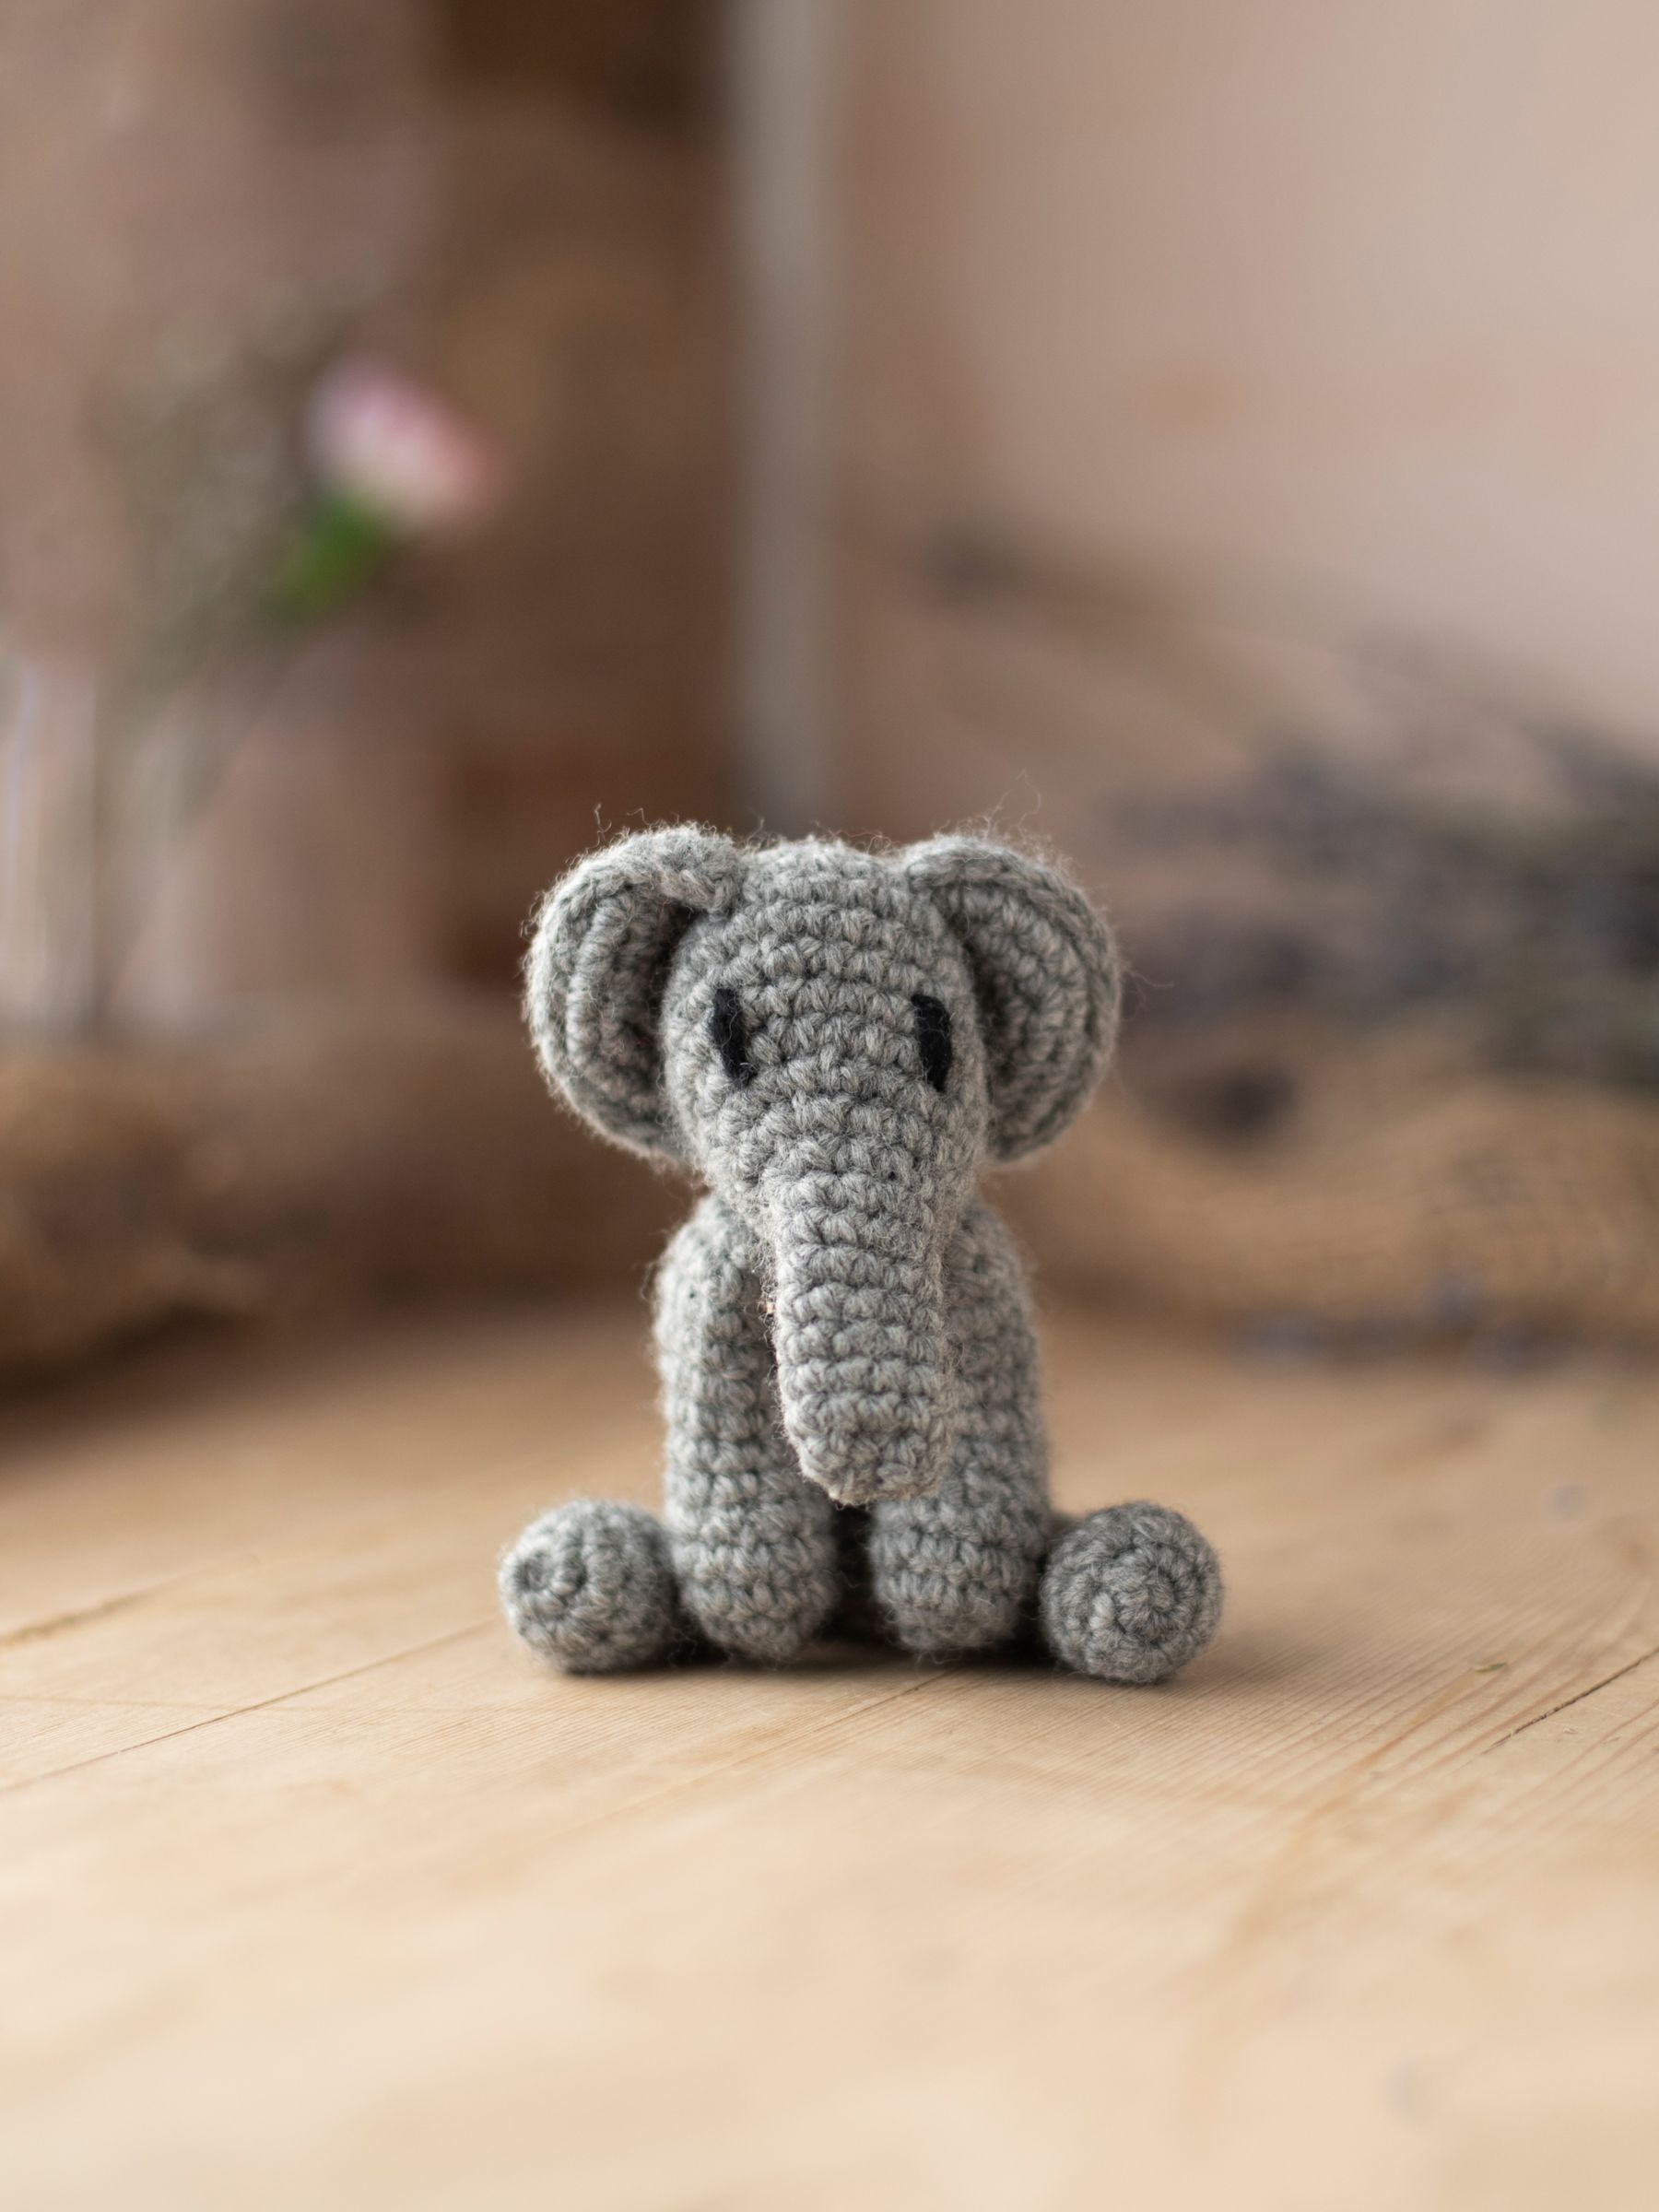 Toft Crochet MINI Kit Bridget the Elephant Mini DIY Amigurumi DIY